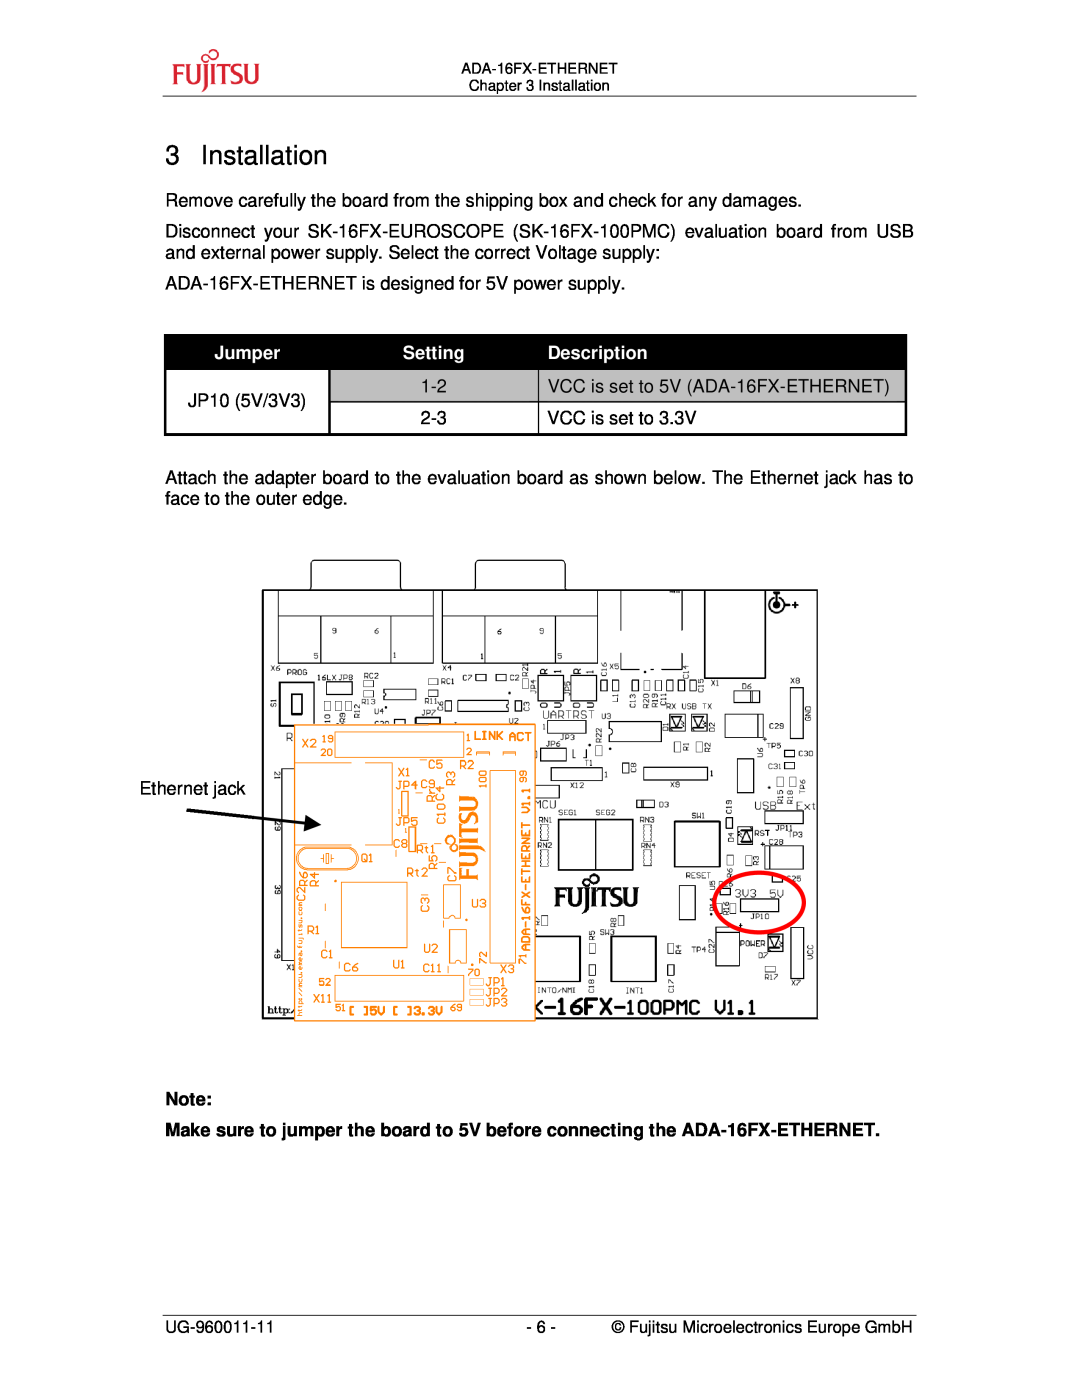 Fujitsu ADA-16FX manual Installation, Jumper, Setting, Description 